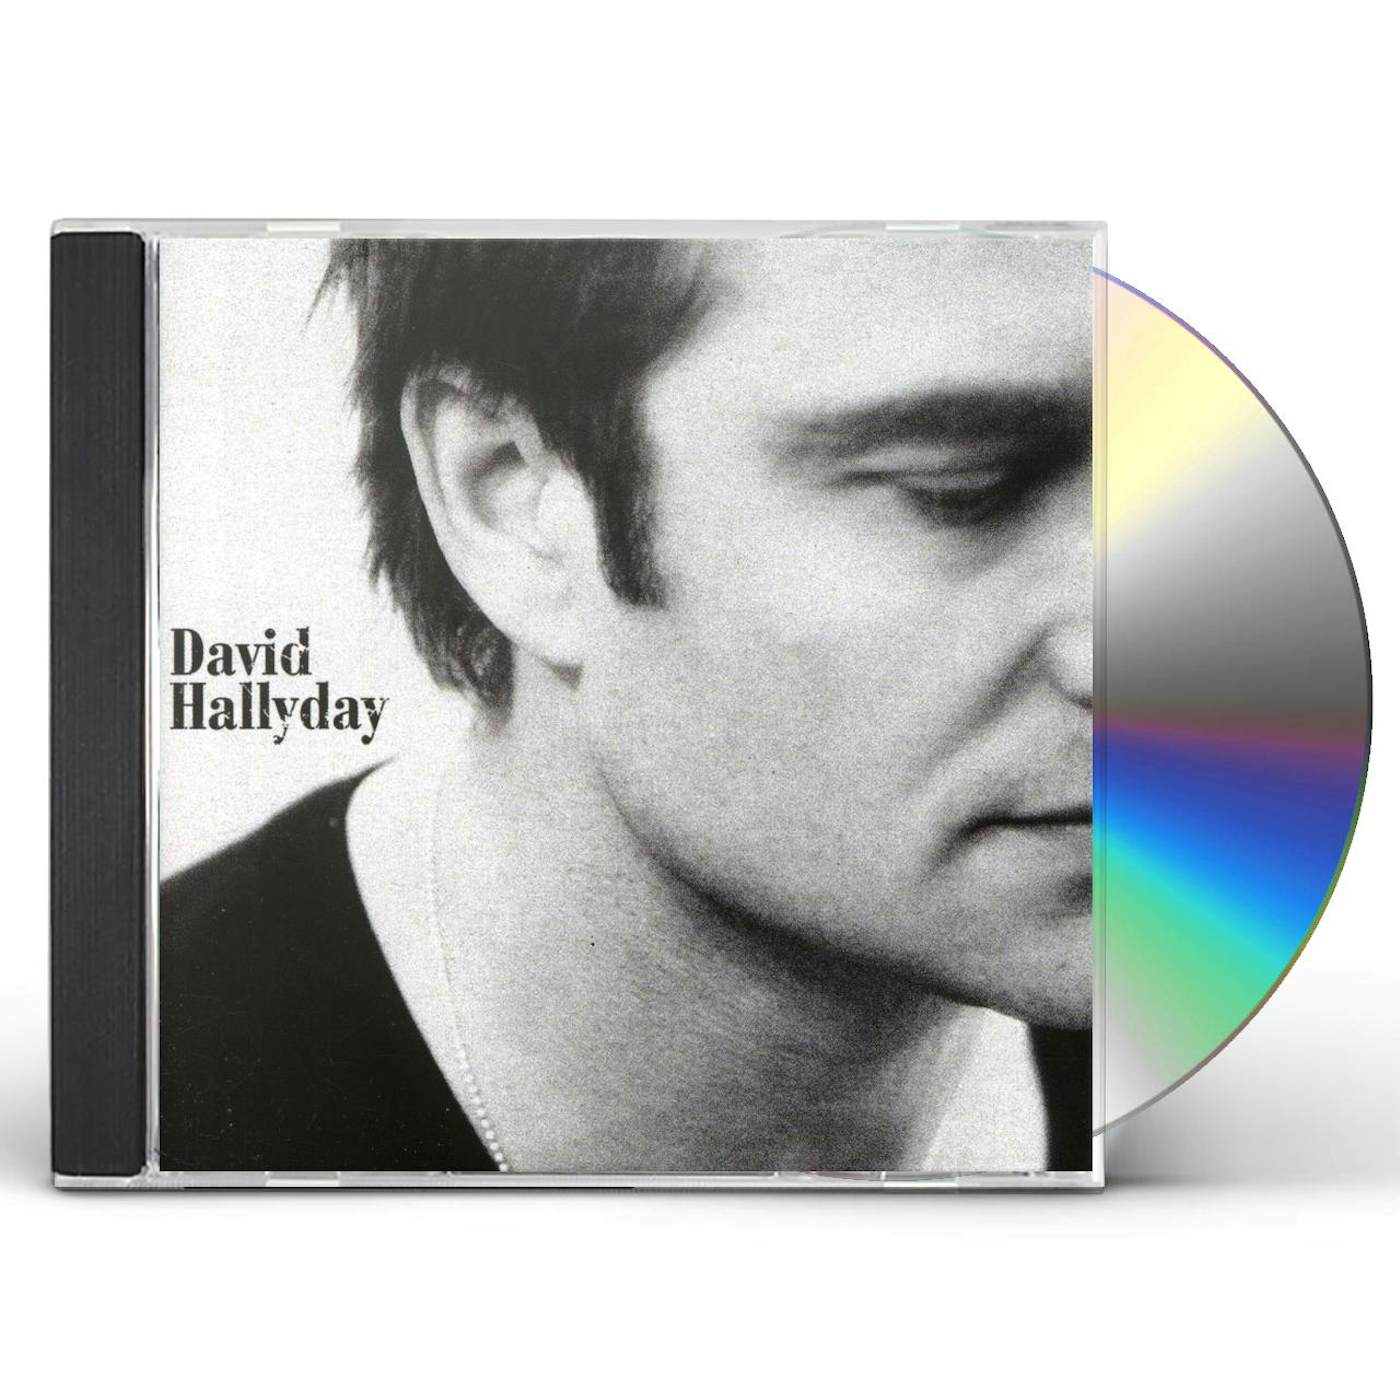 hamlet cd - Johnny Hallyday